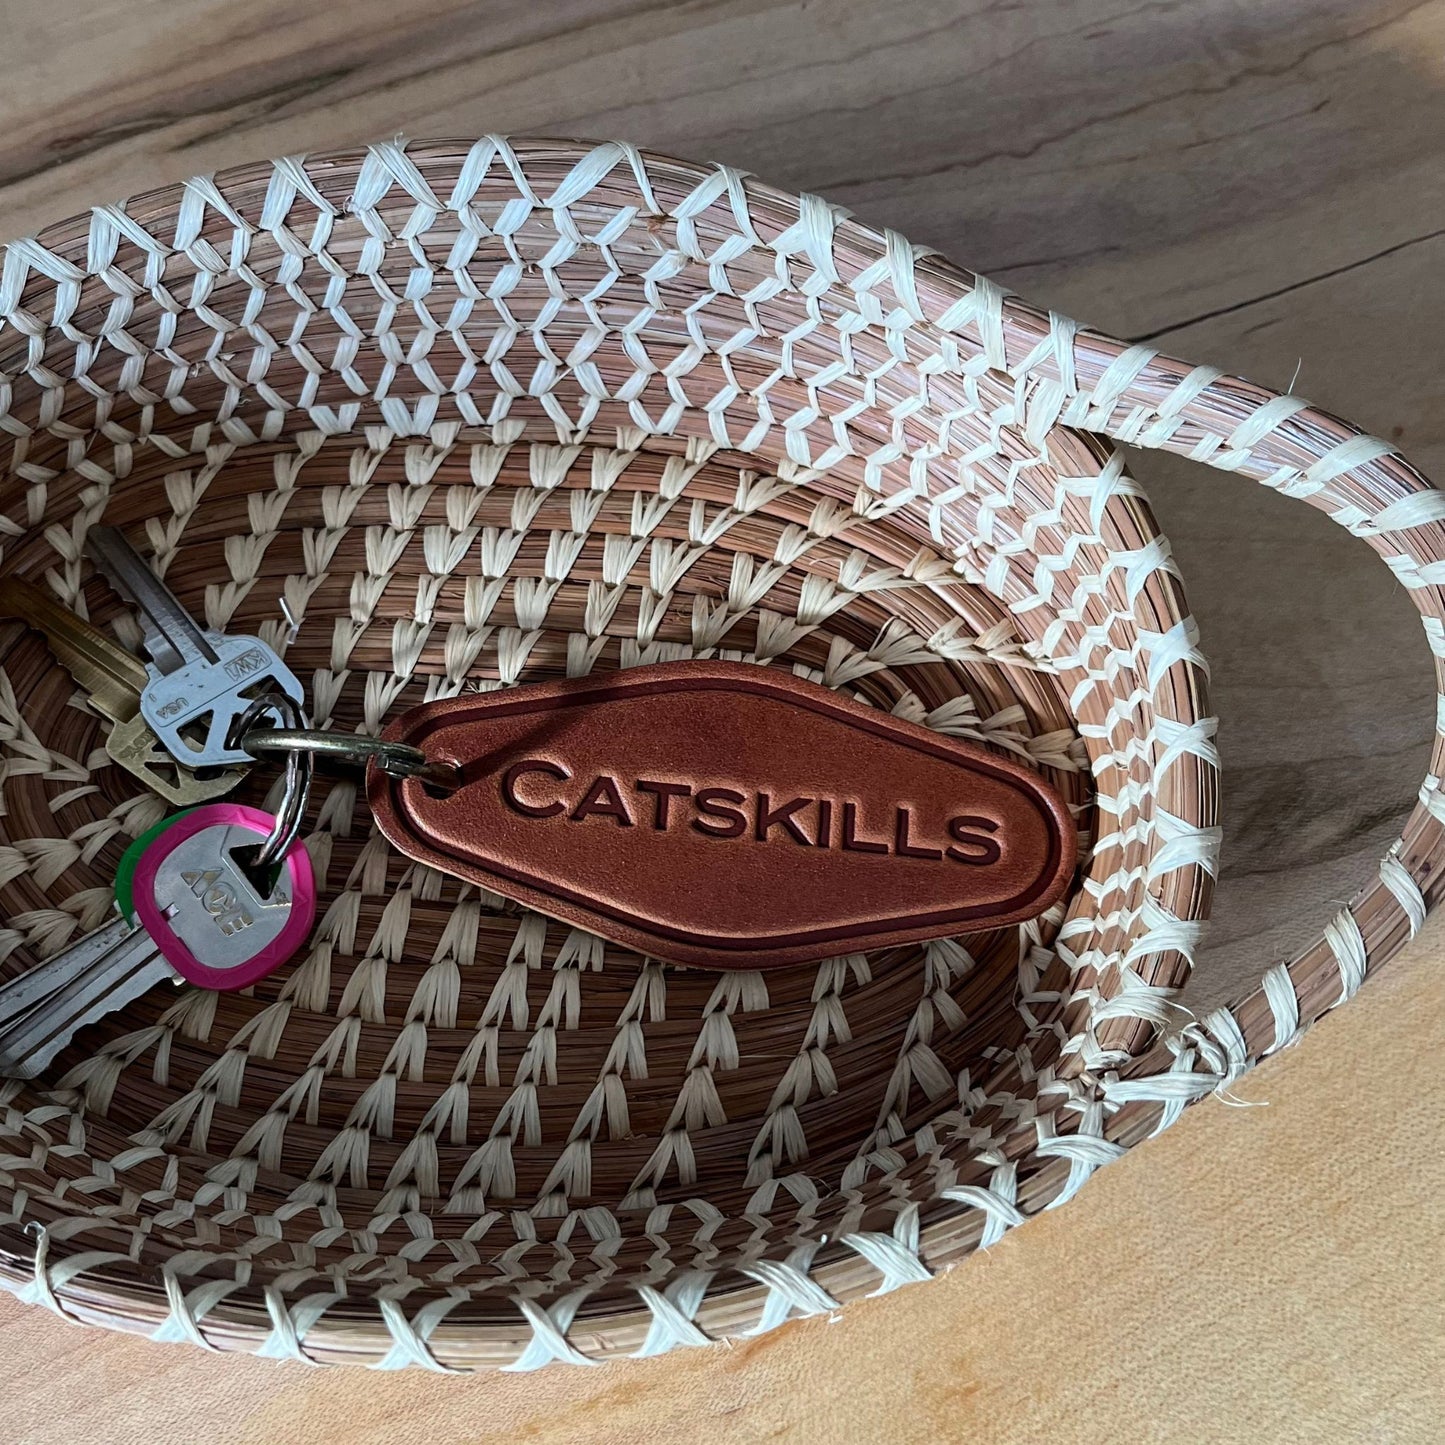 Catskills Leather Keychain in a Pine basket 